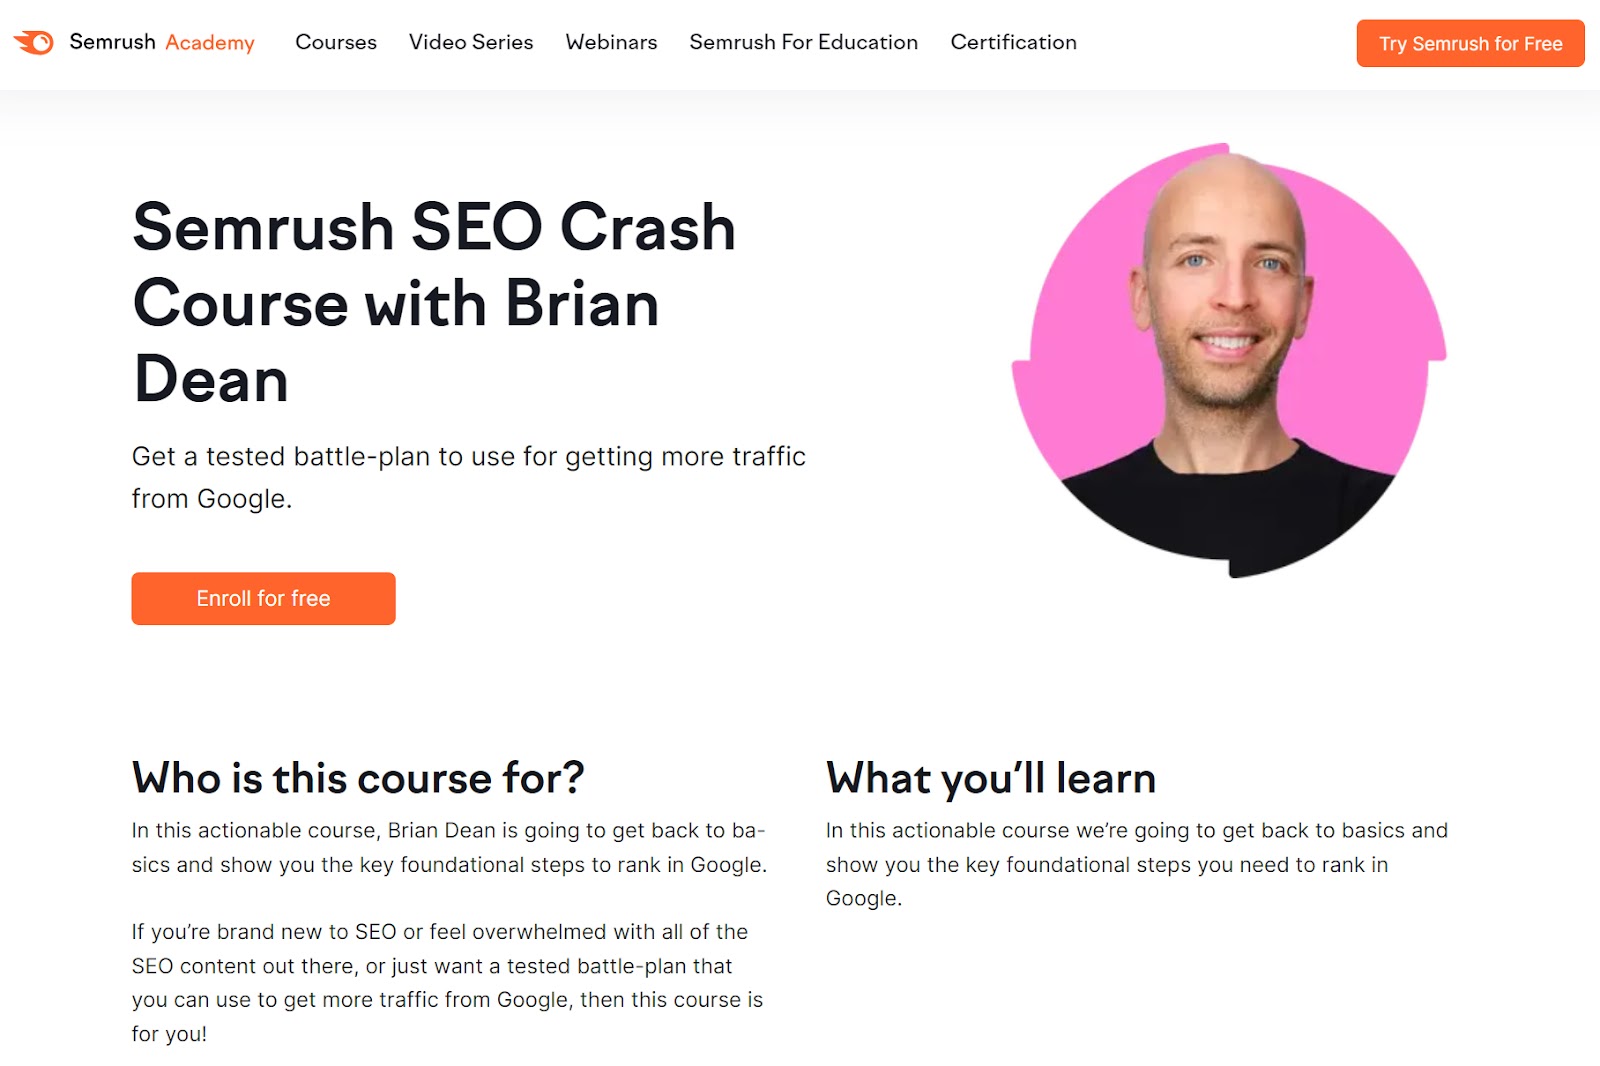 Semrush SEO Crash Course with Brian Dean landing page